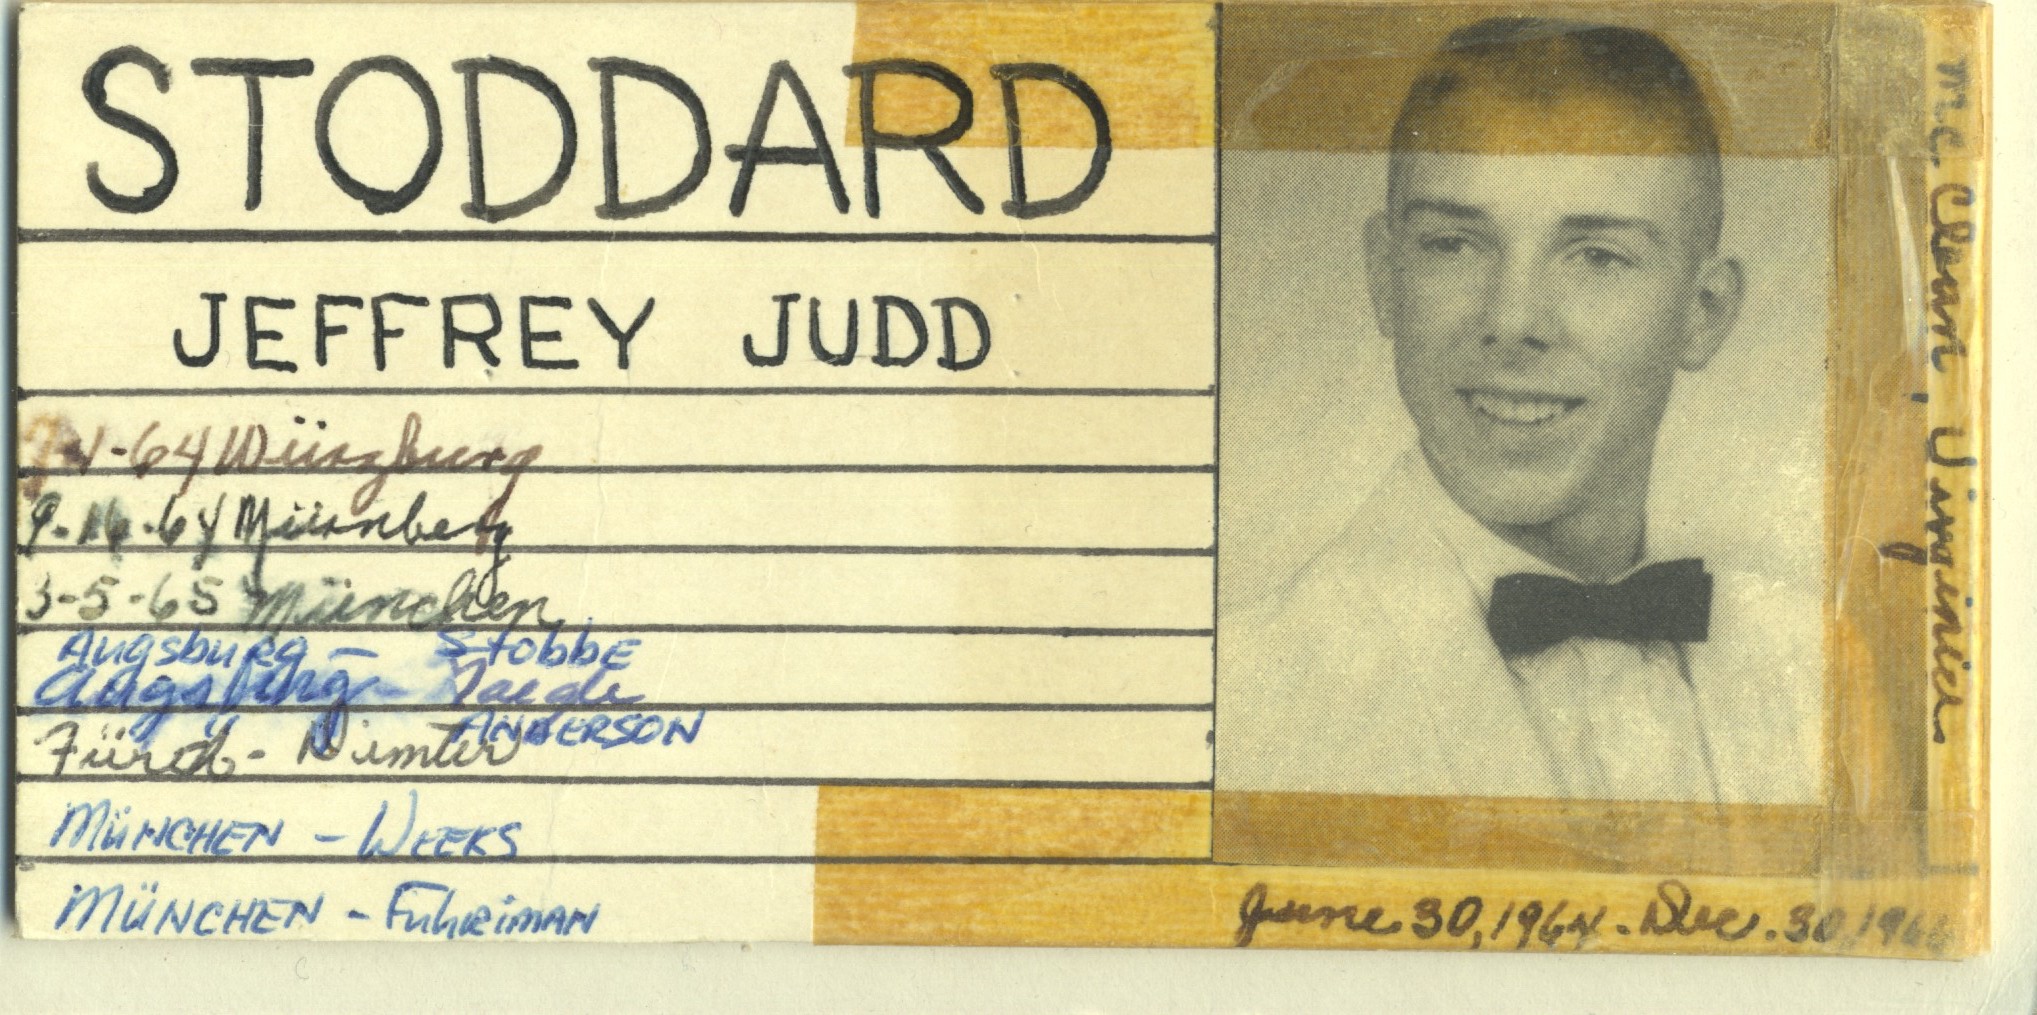 Stoddard, Jeffrey Judd